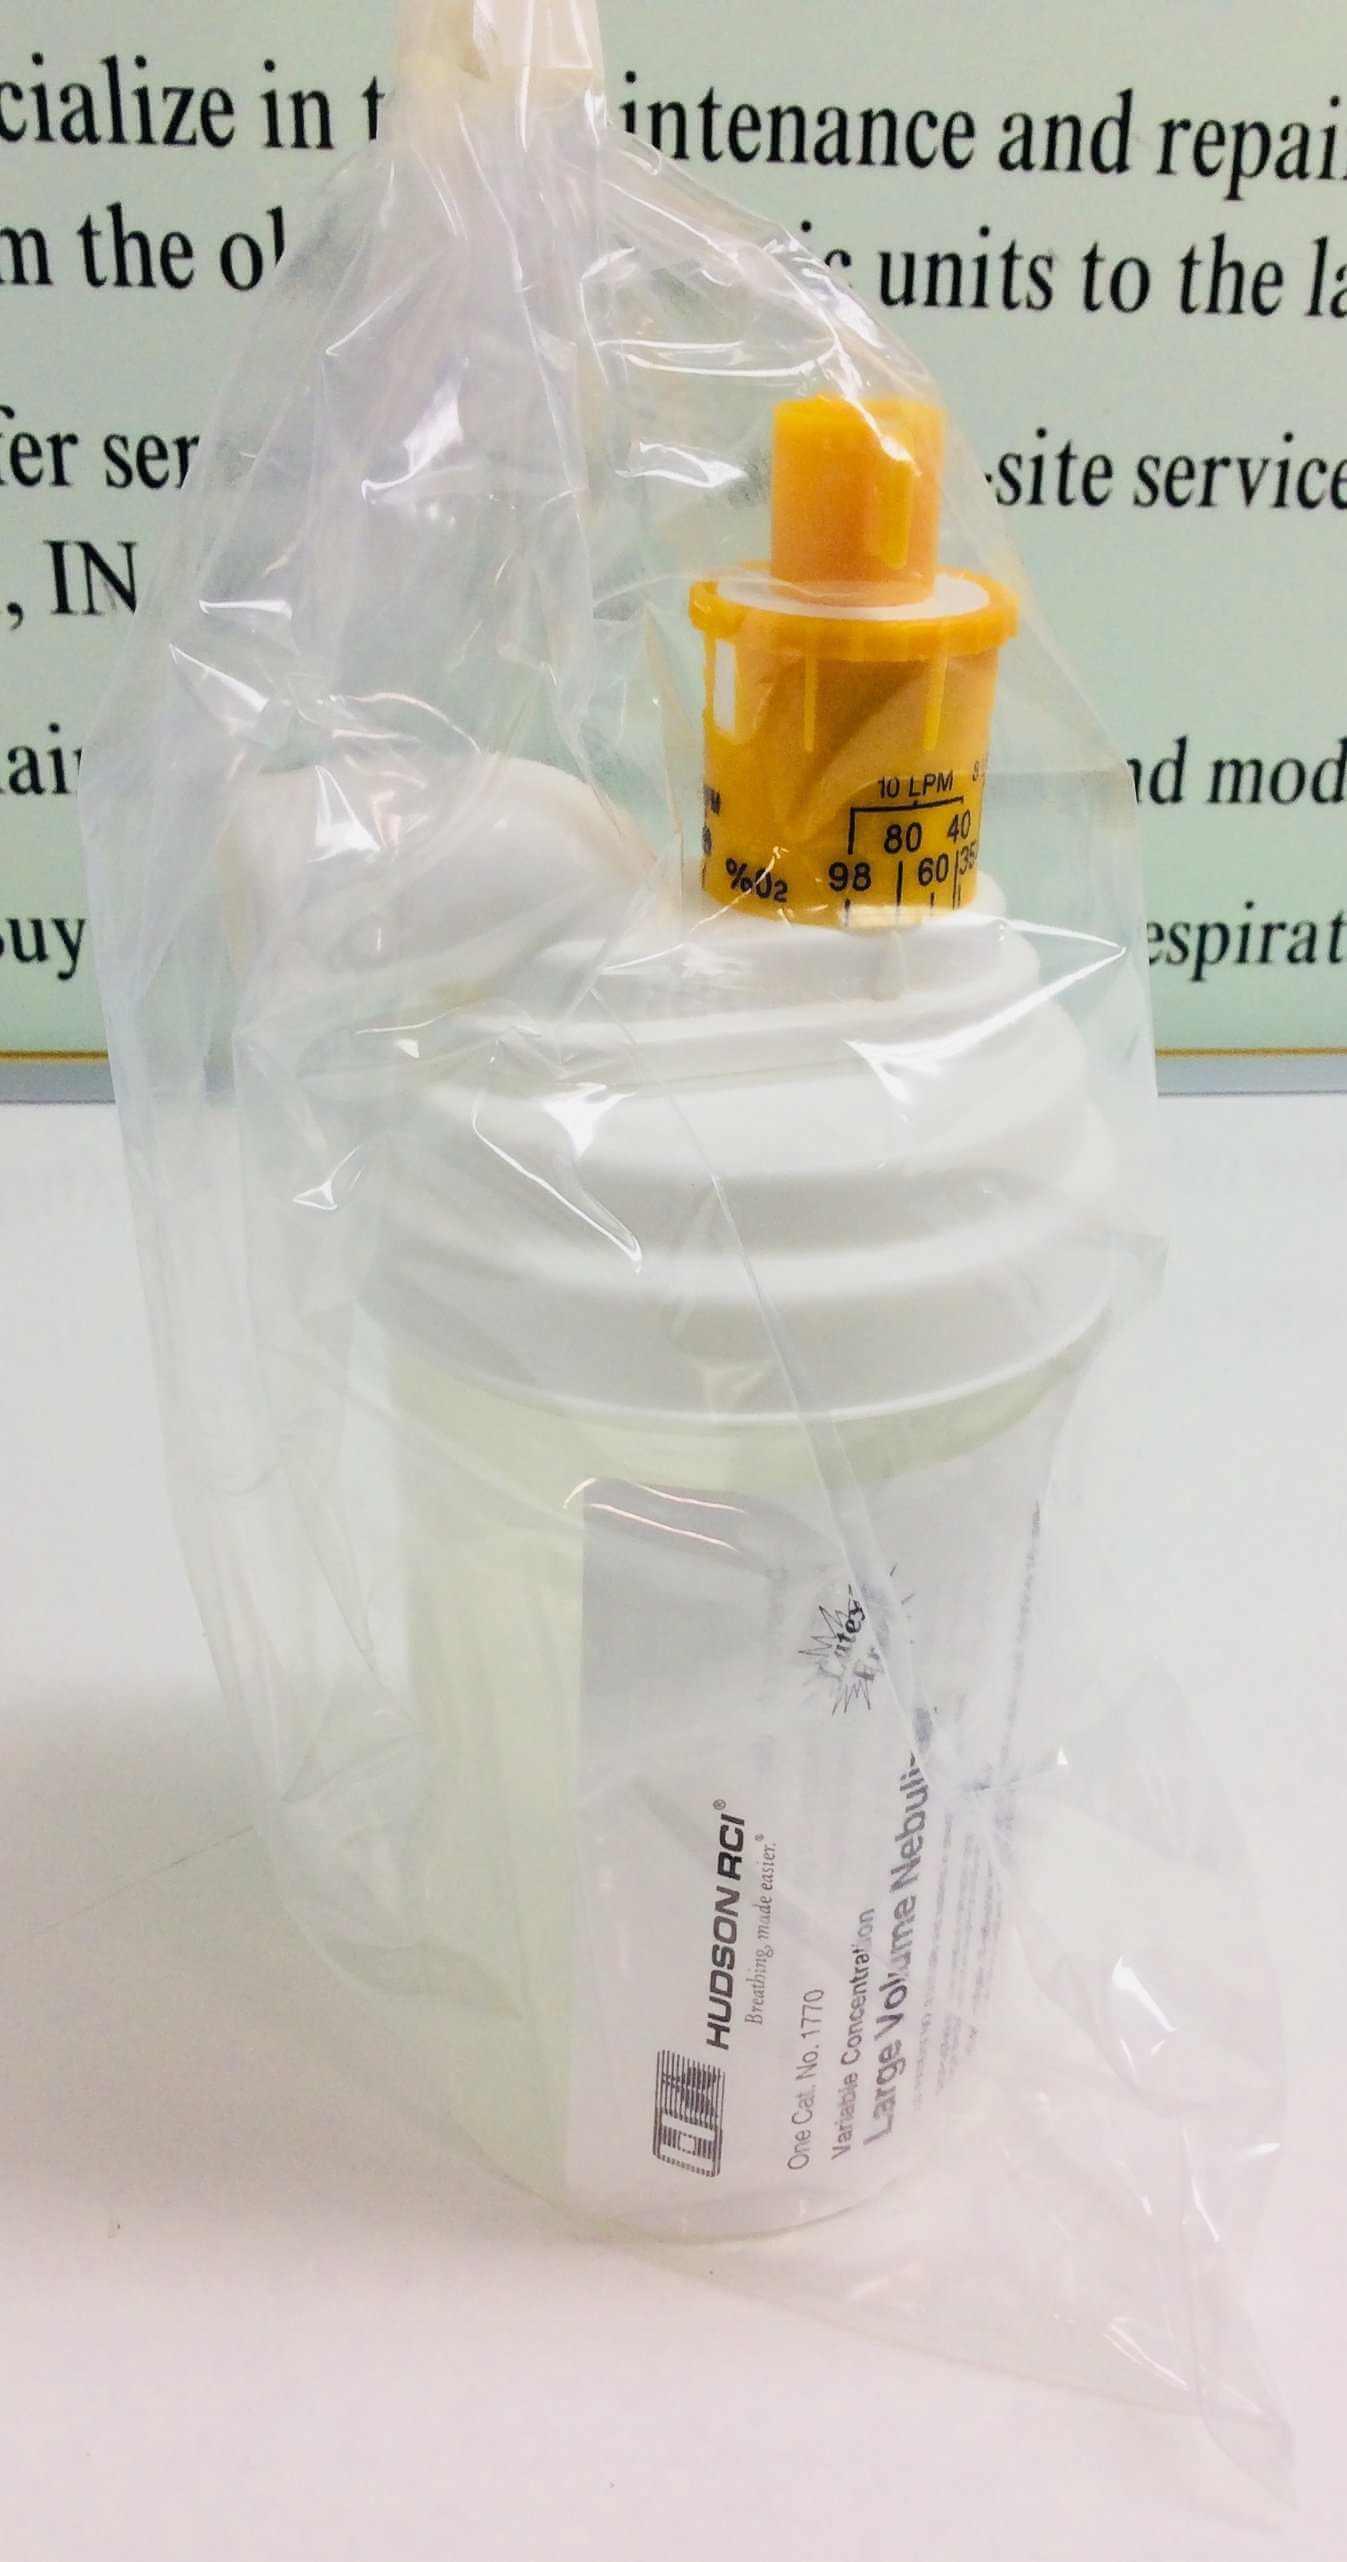 Case of 35 NEW Hudson RCI Disposable Large Volume Nebulizer Humidifier Bottle 1770 - MBR Medicals